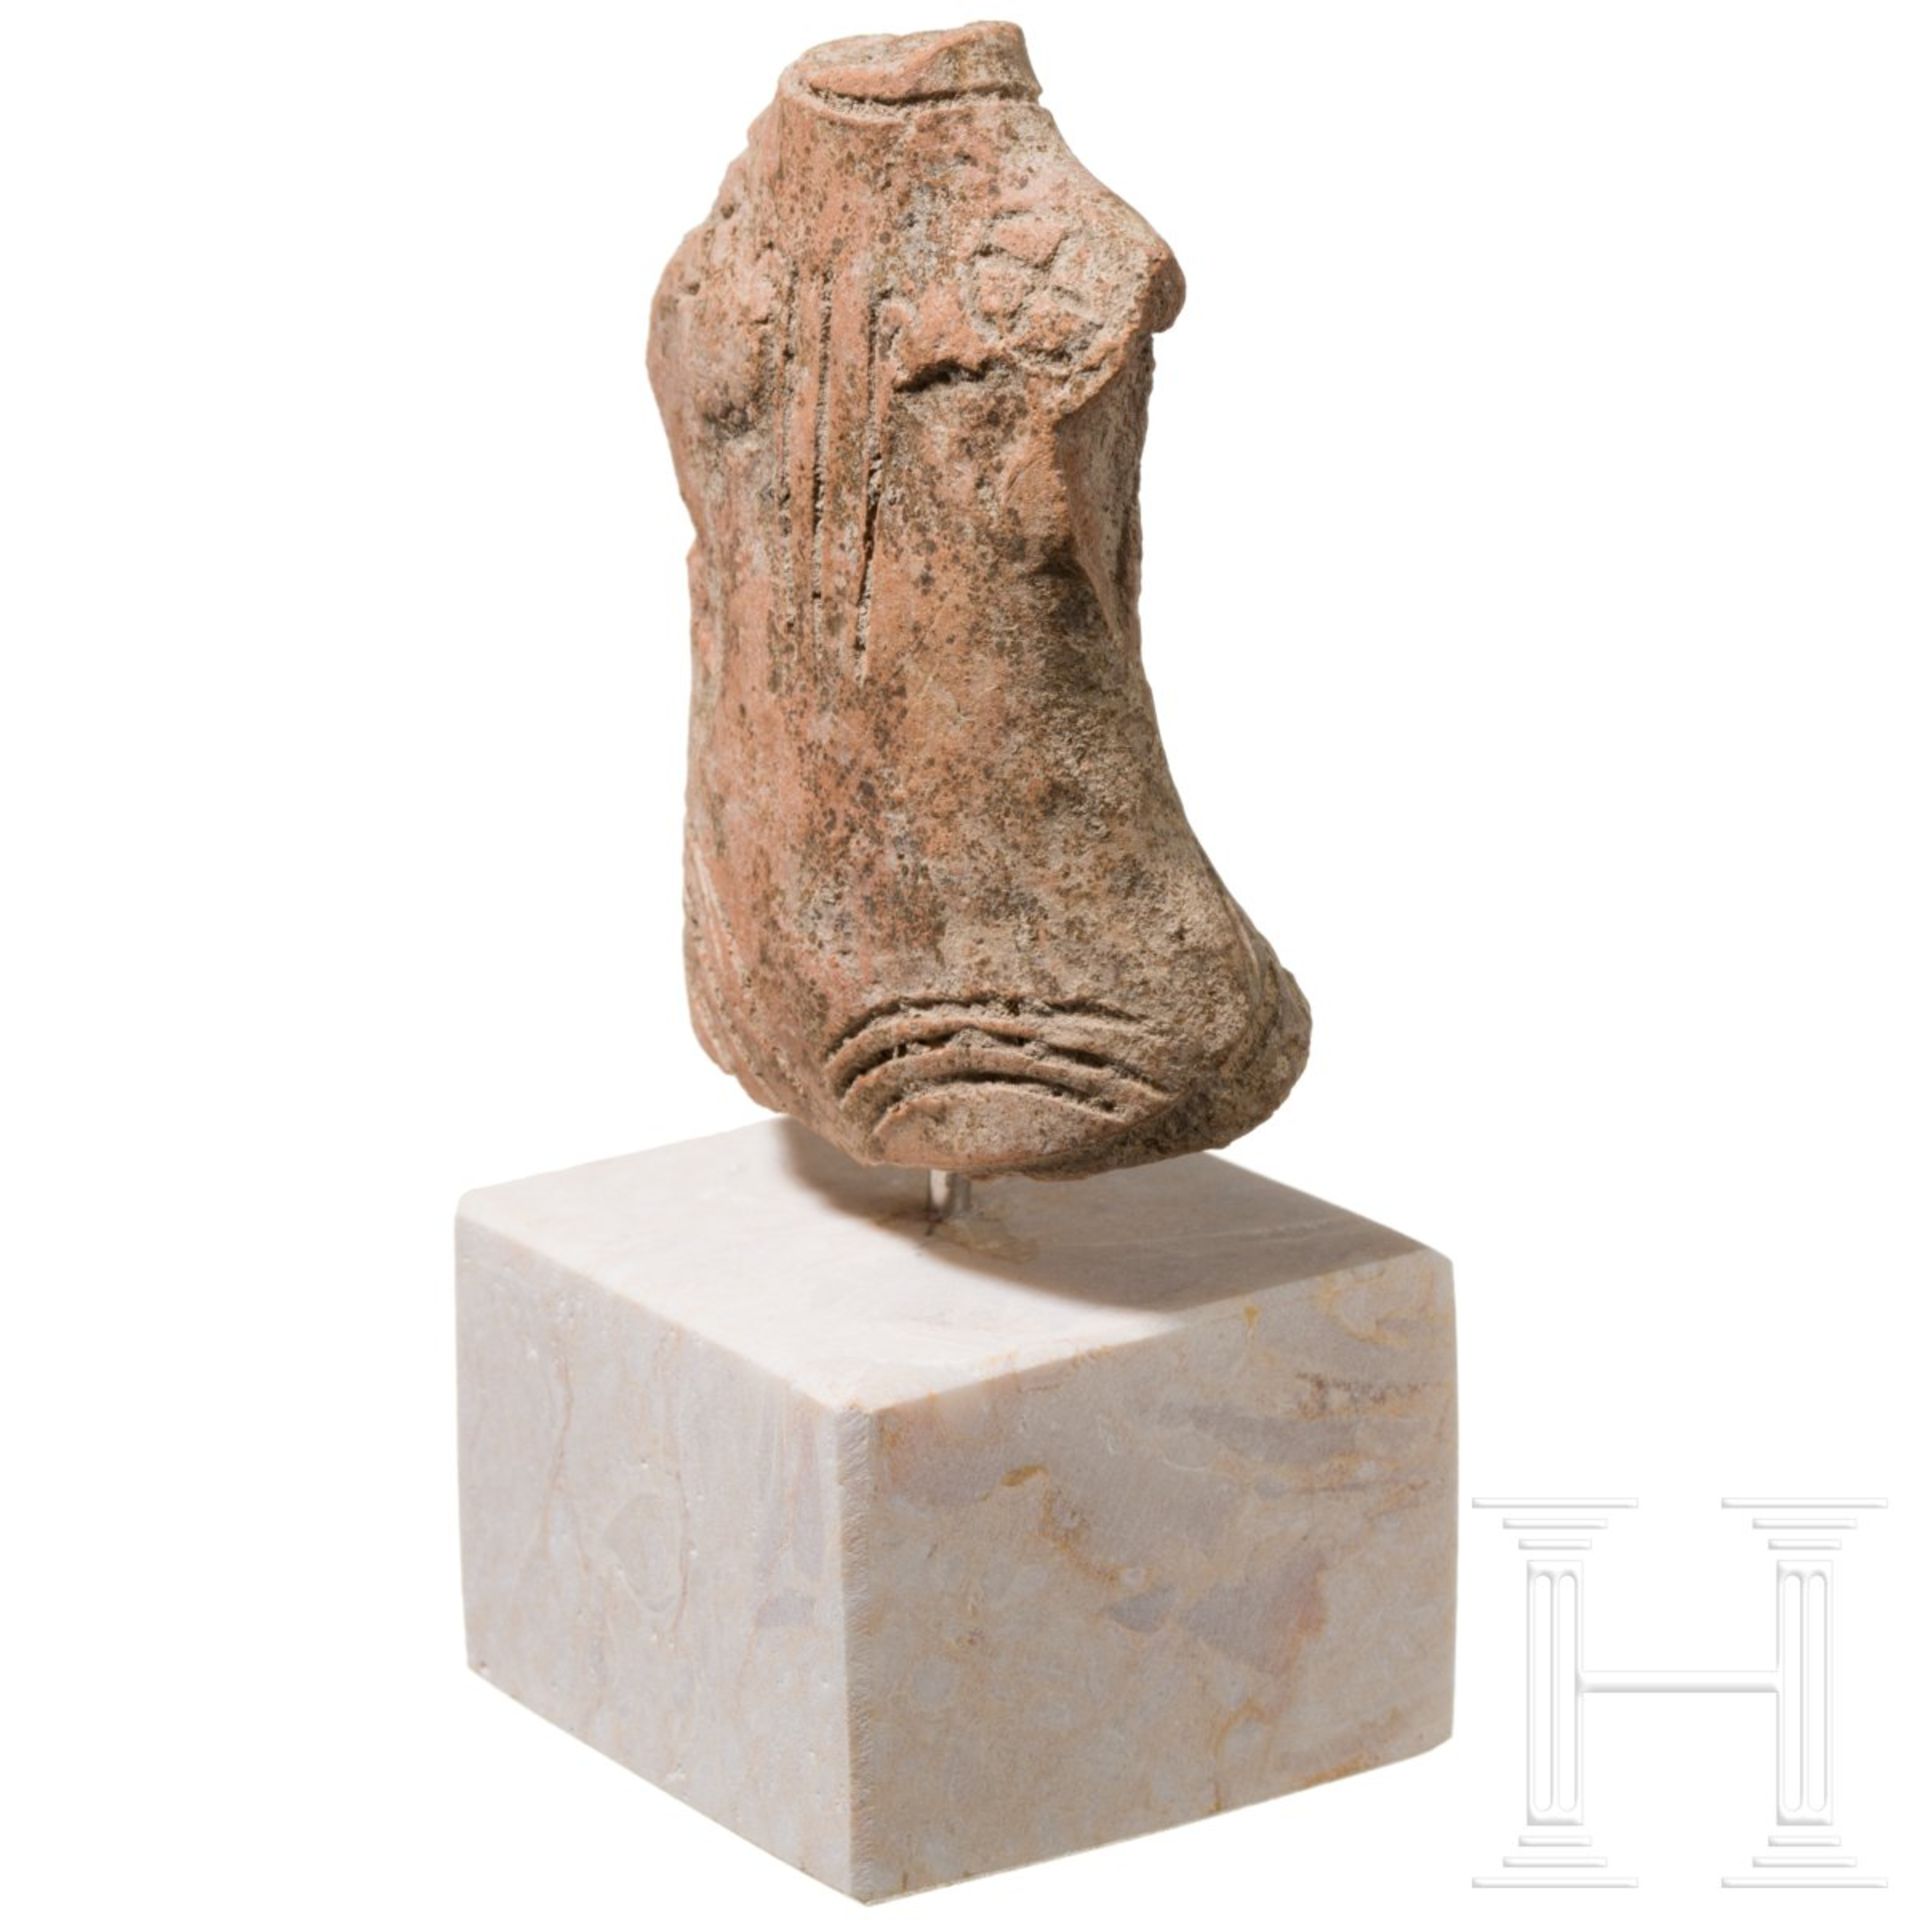 Terrakotta-Idol, Vinca-Kultur, Südosteuropa, 4. Jtsd. v. Chr. - Bild 2 aus 5